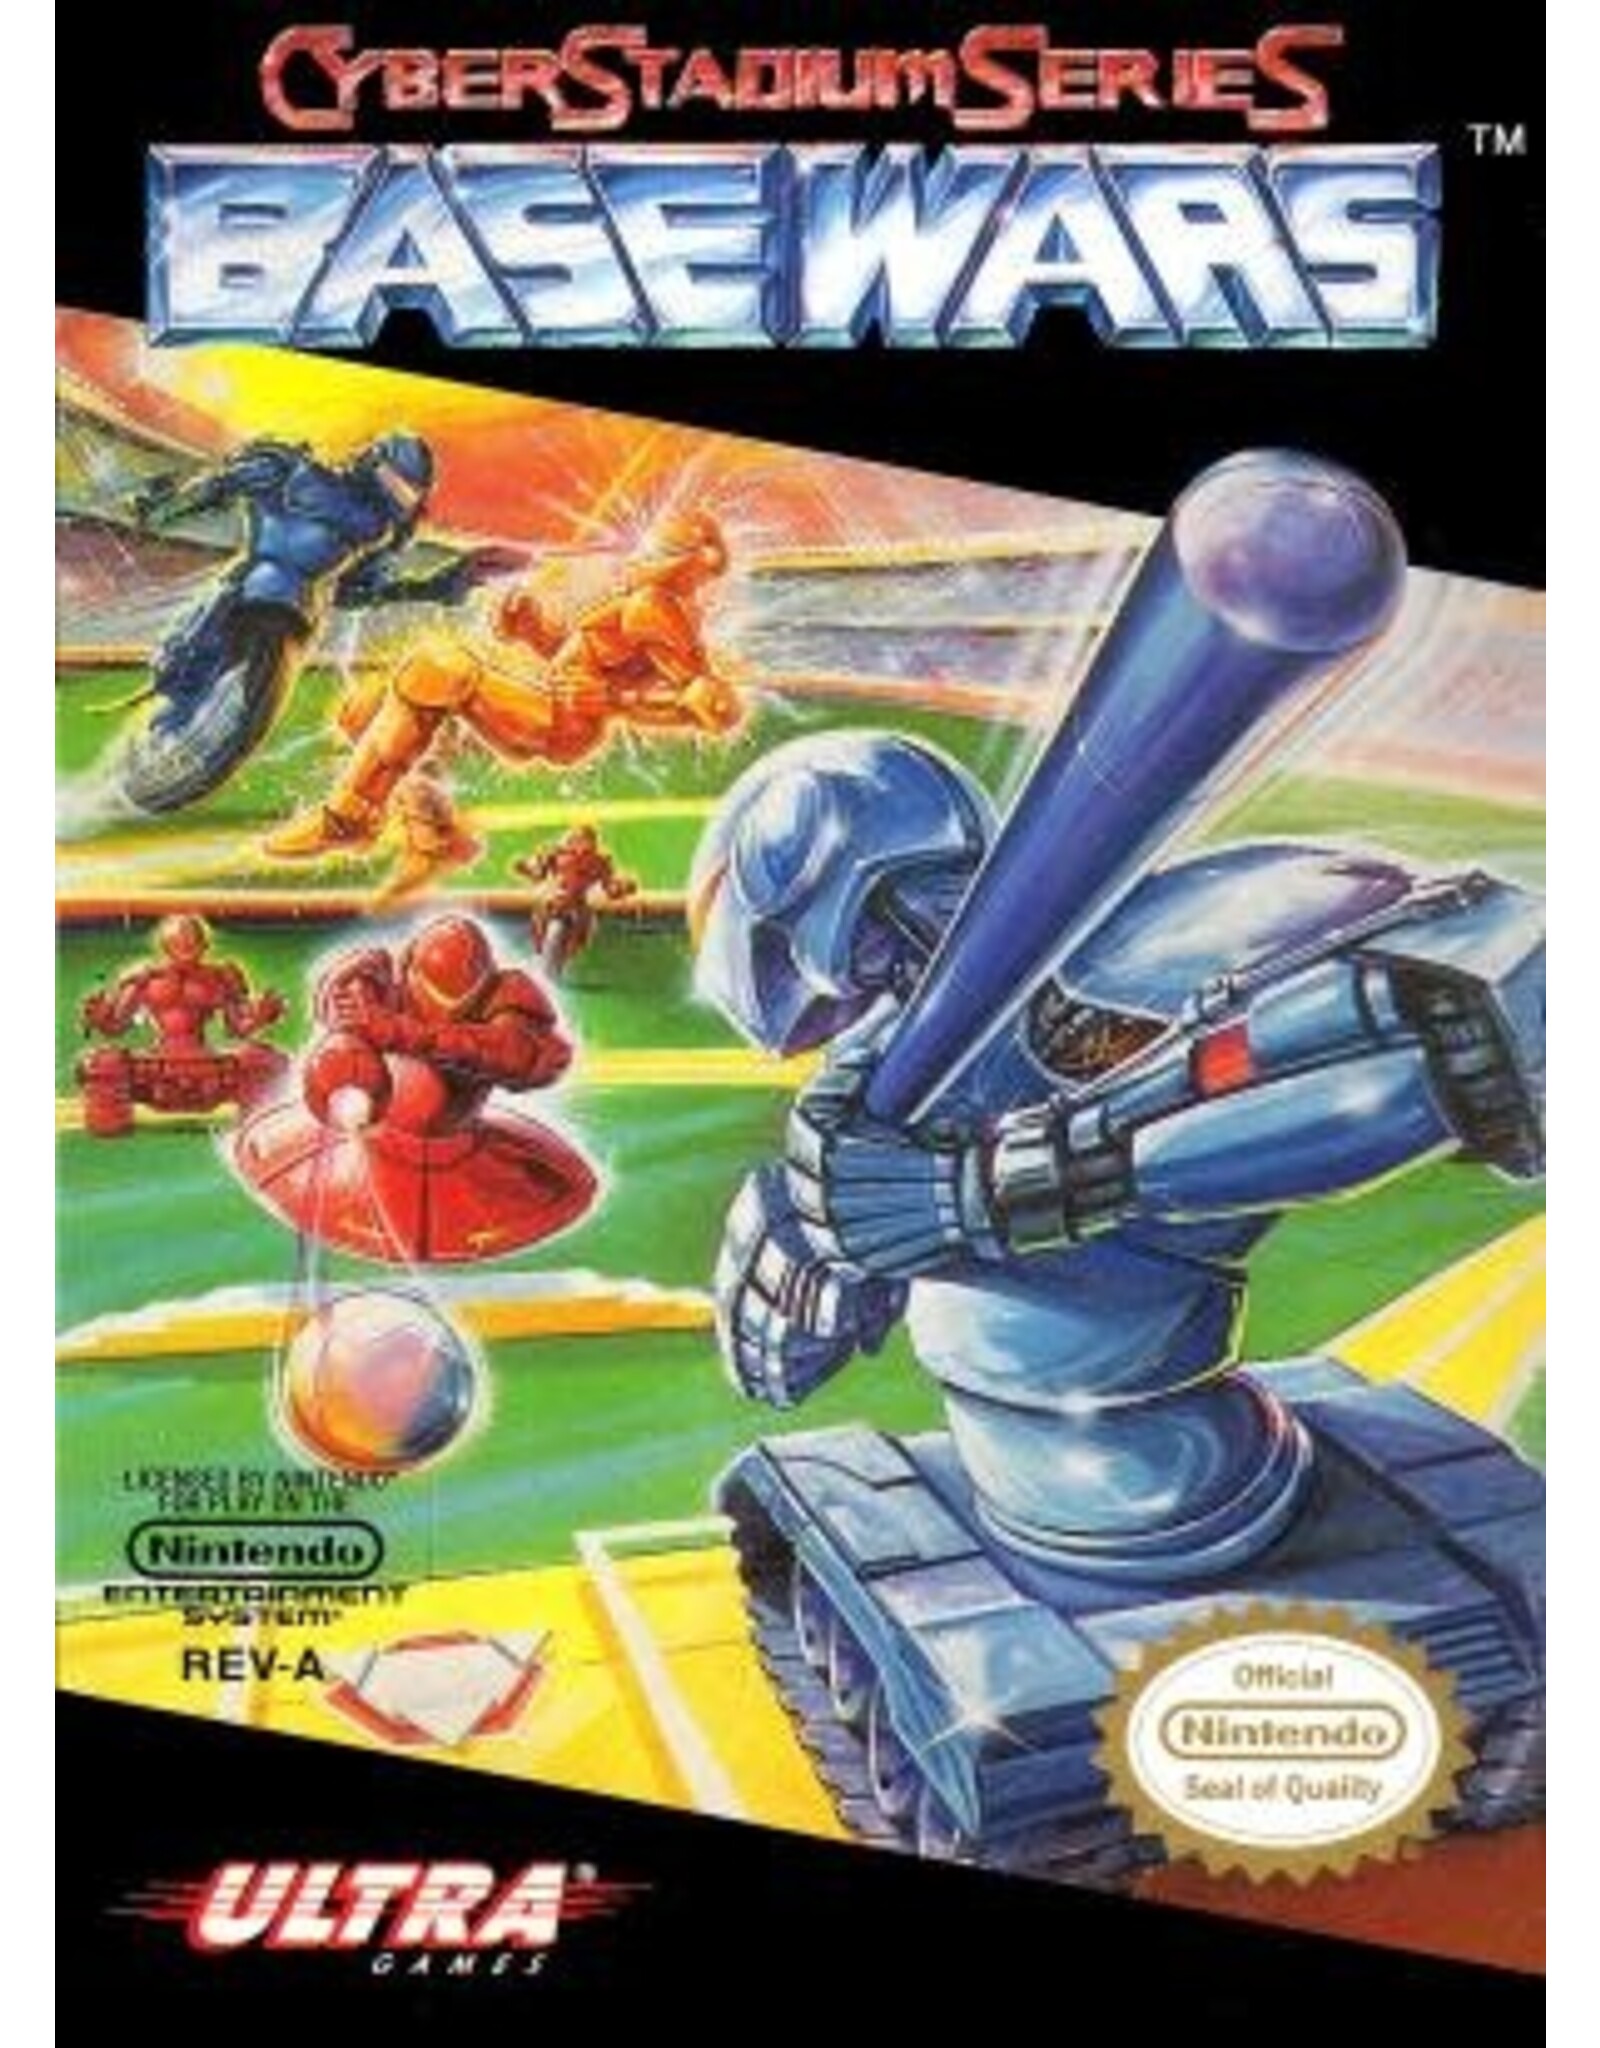 NES Cyberstadium Series Base Wars (Cart Only, Damaged Label)